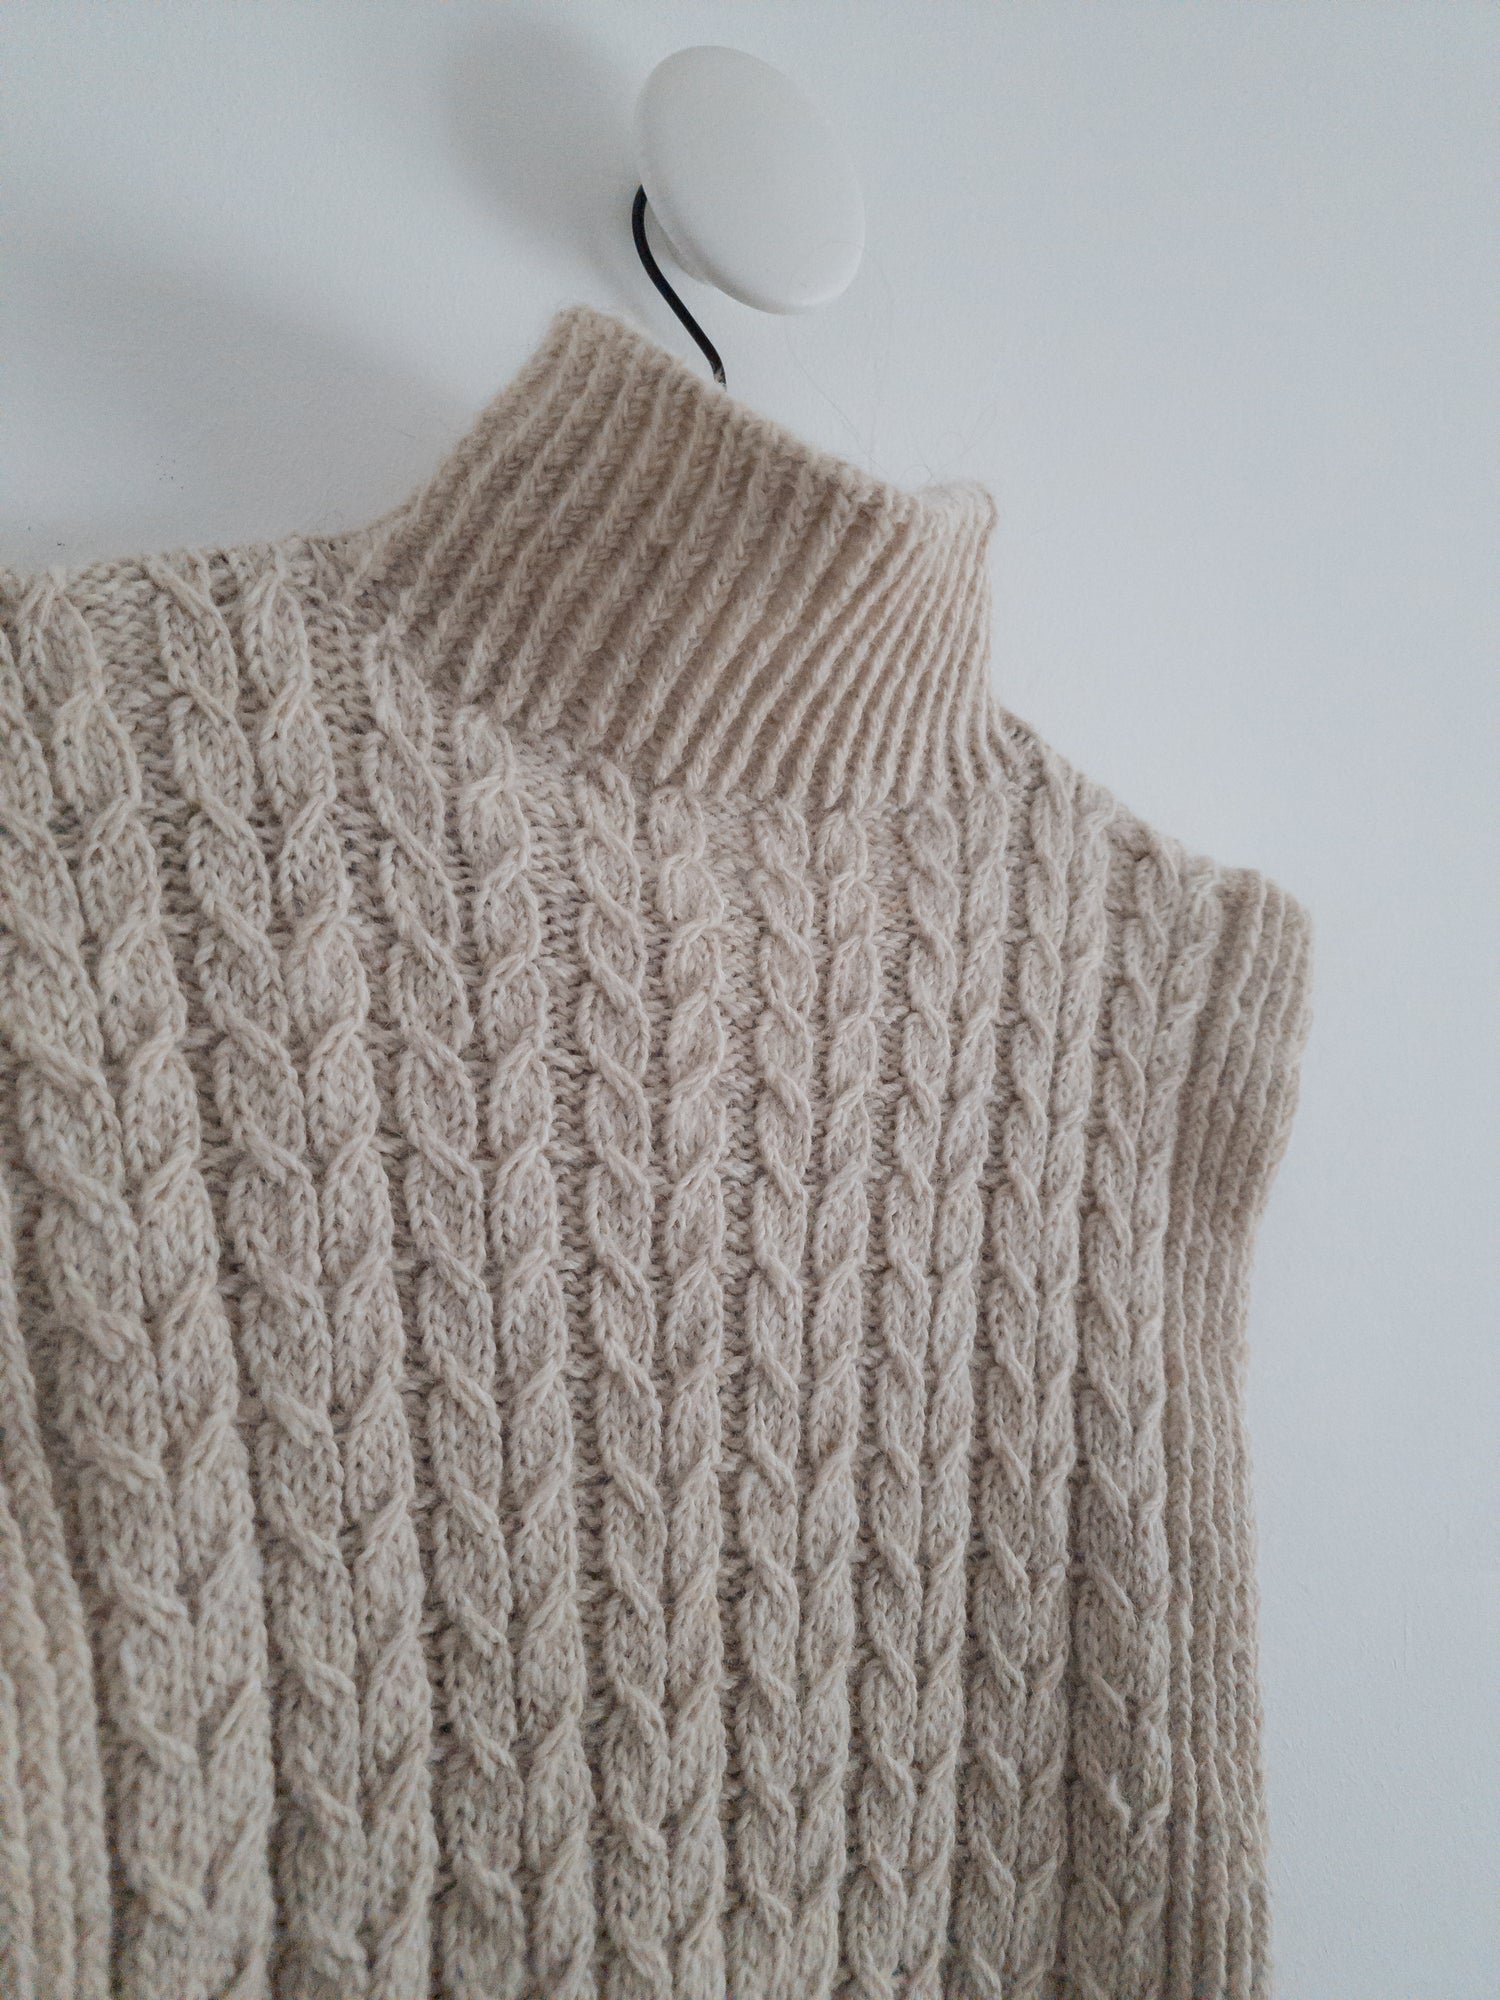 Imagine Spring Cowl - Knitting Pattern – Woodlandsknits